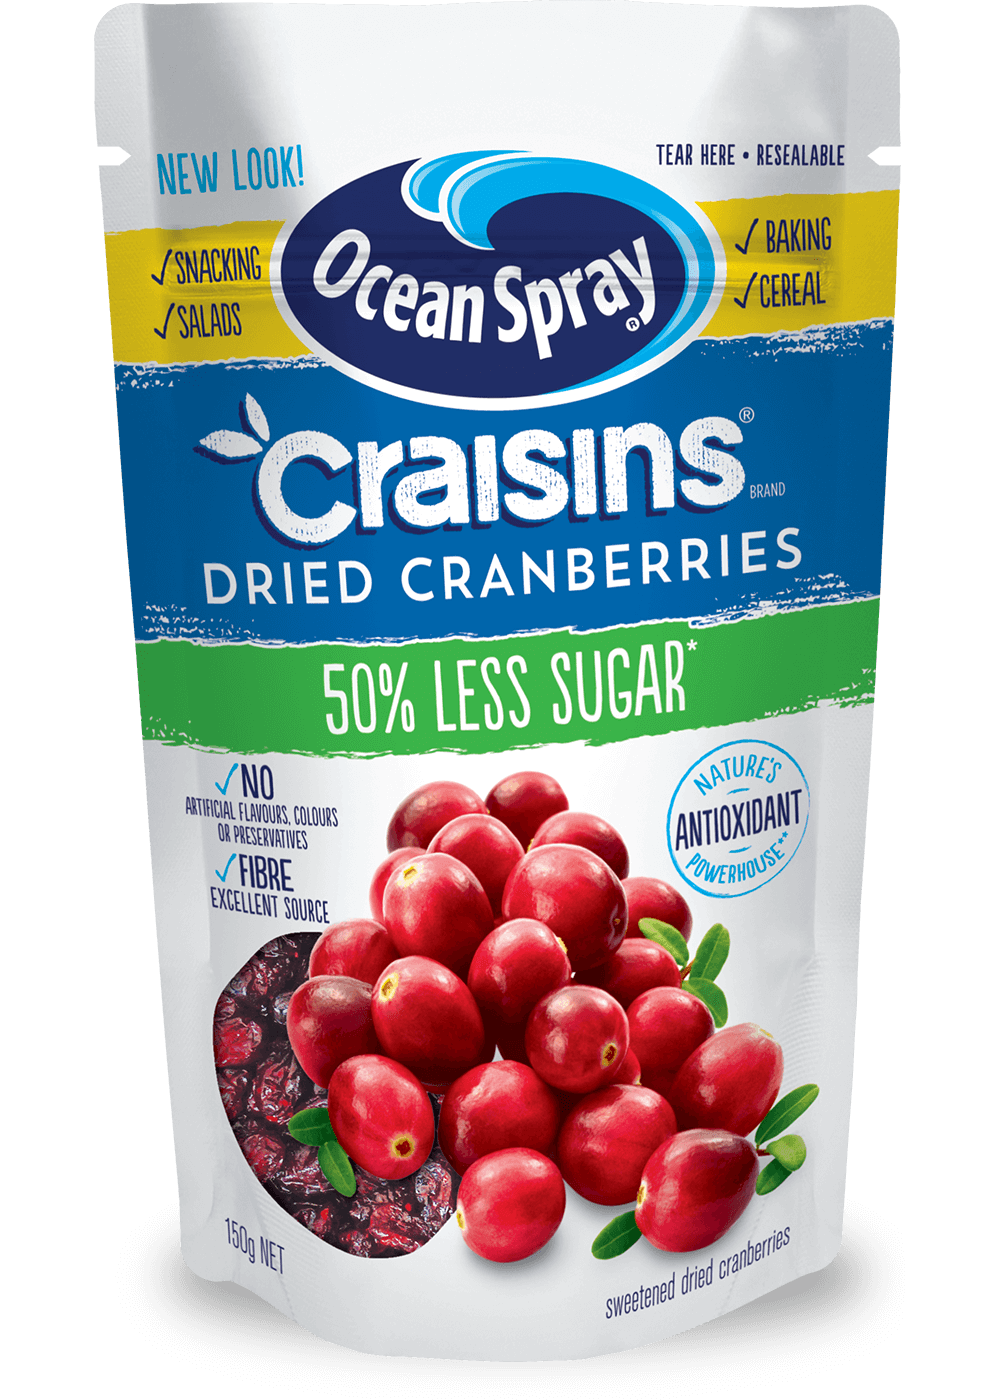 Reduced Sugar Craisins® Dried Cranberries